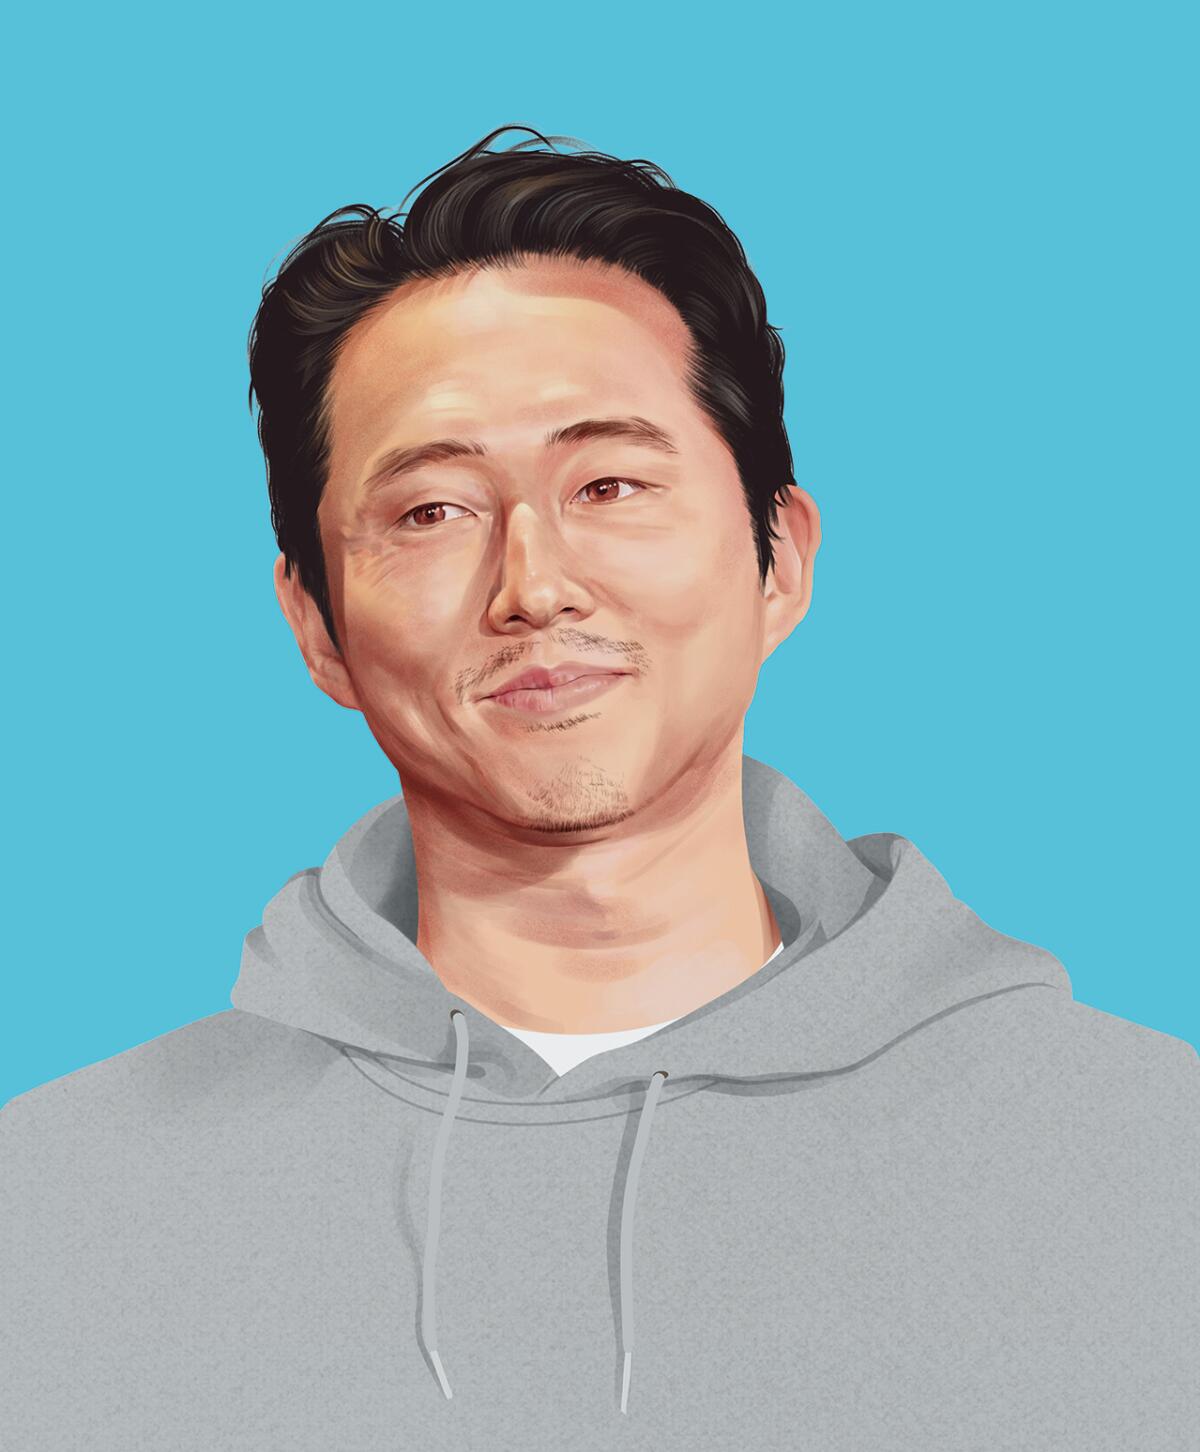 An illustration of actor Steven Yeun wearing a hoody.